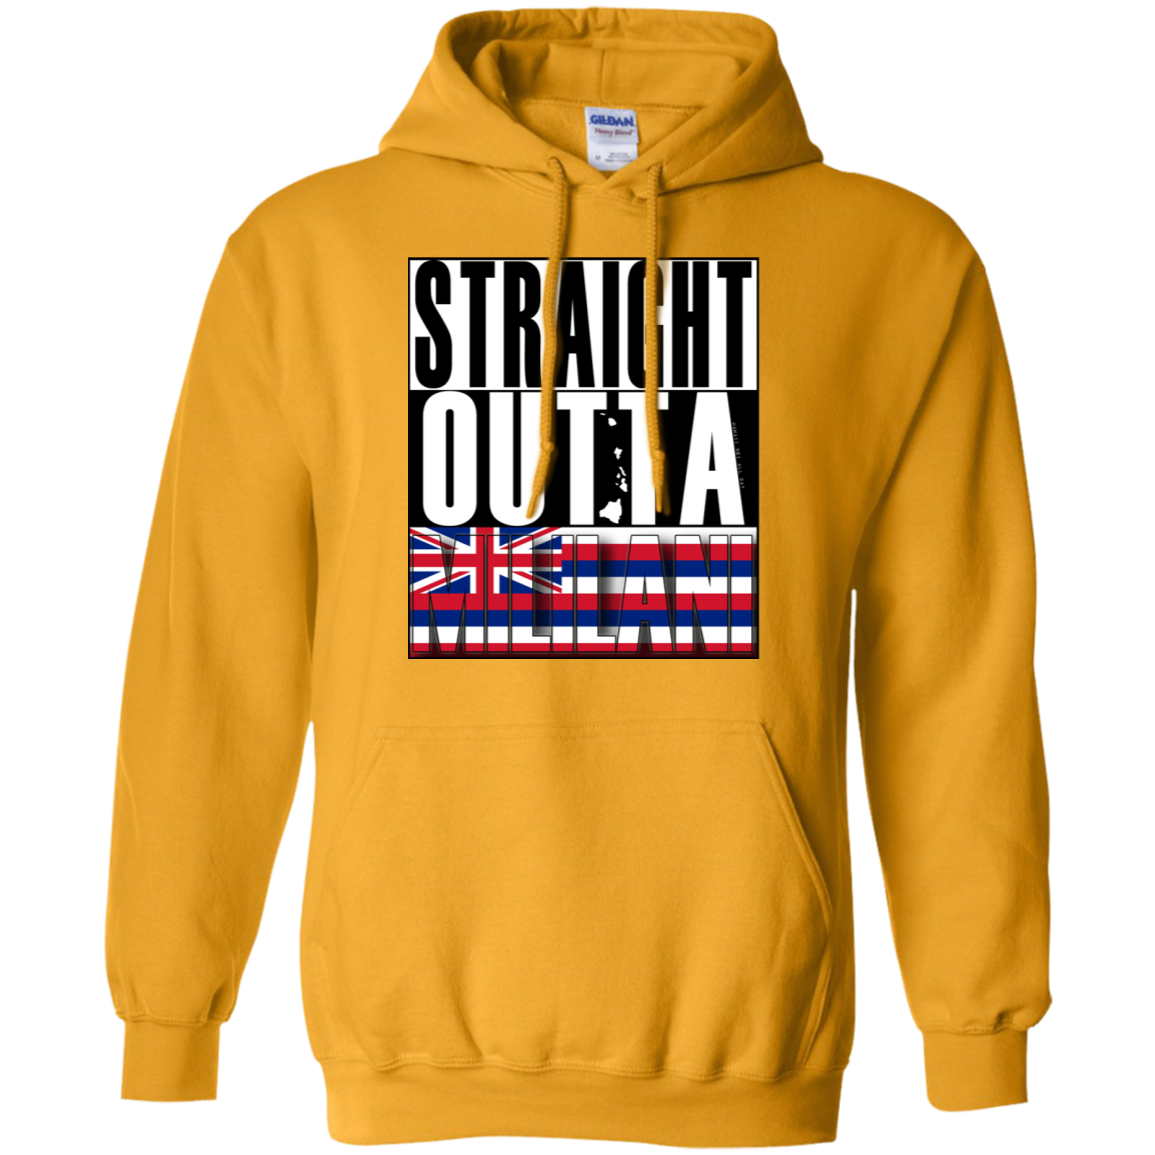 Straight Outta Mililani Hawai'i Pullover Hoodie, Sweatshirts, Hawaii Nei All Day